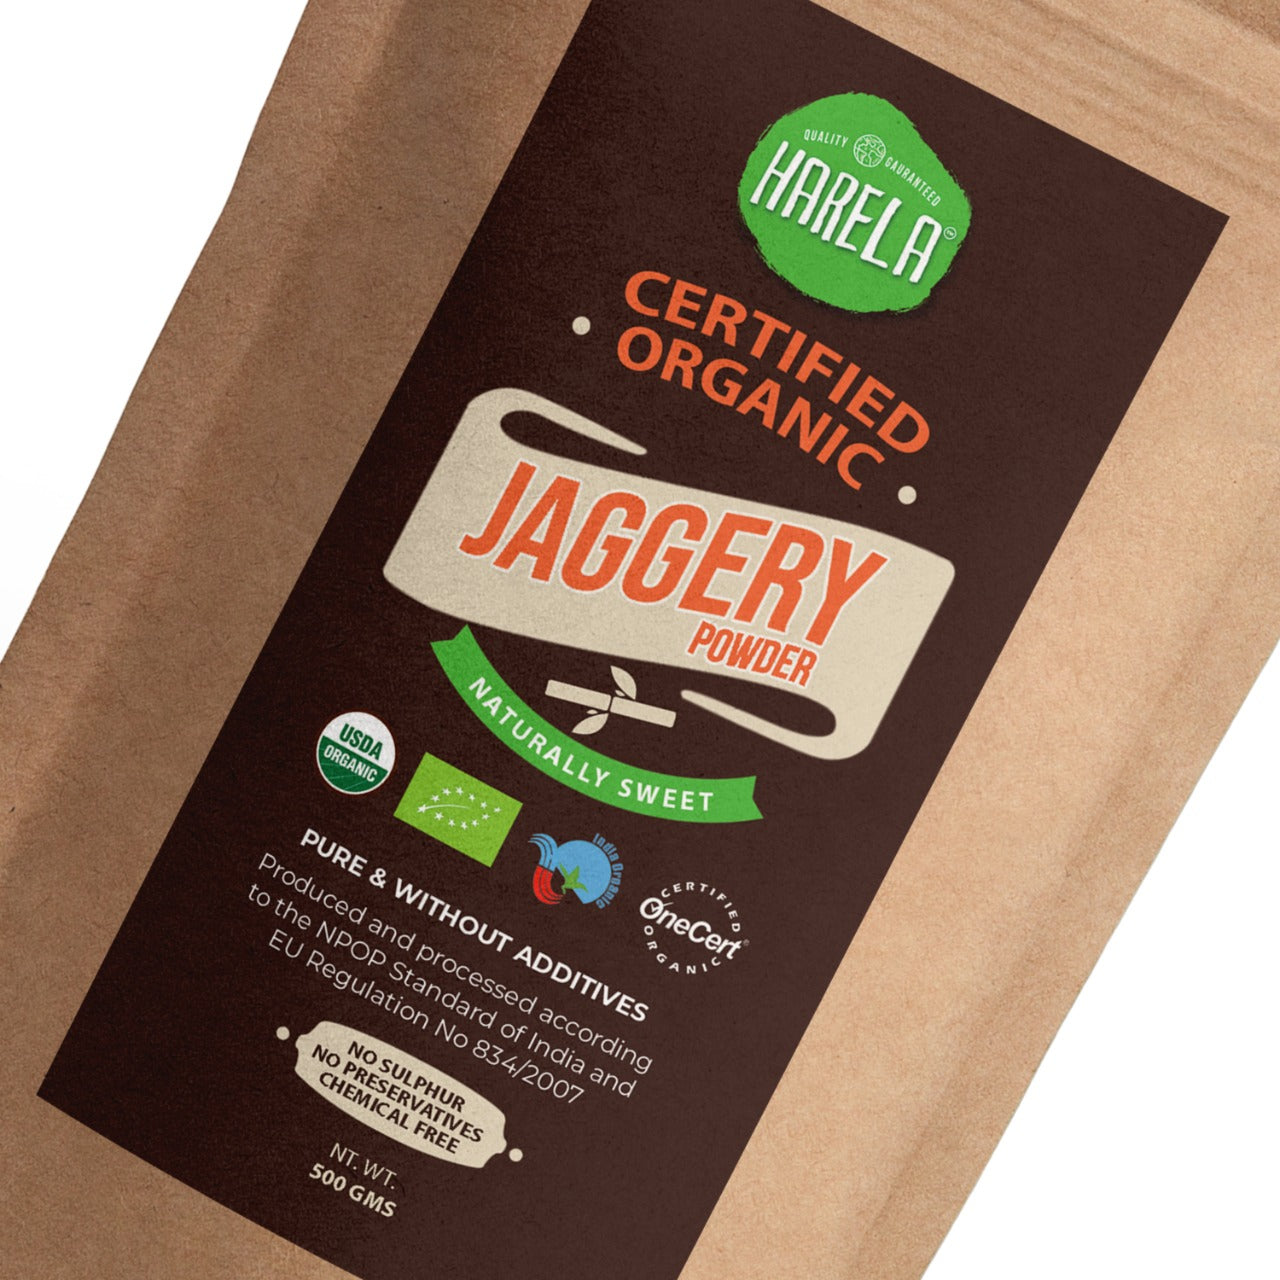 Certified Organic Jaggery Powder